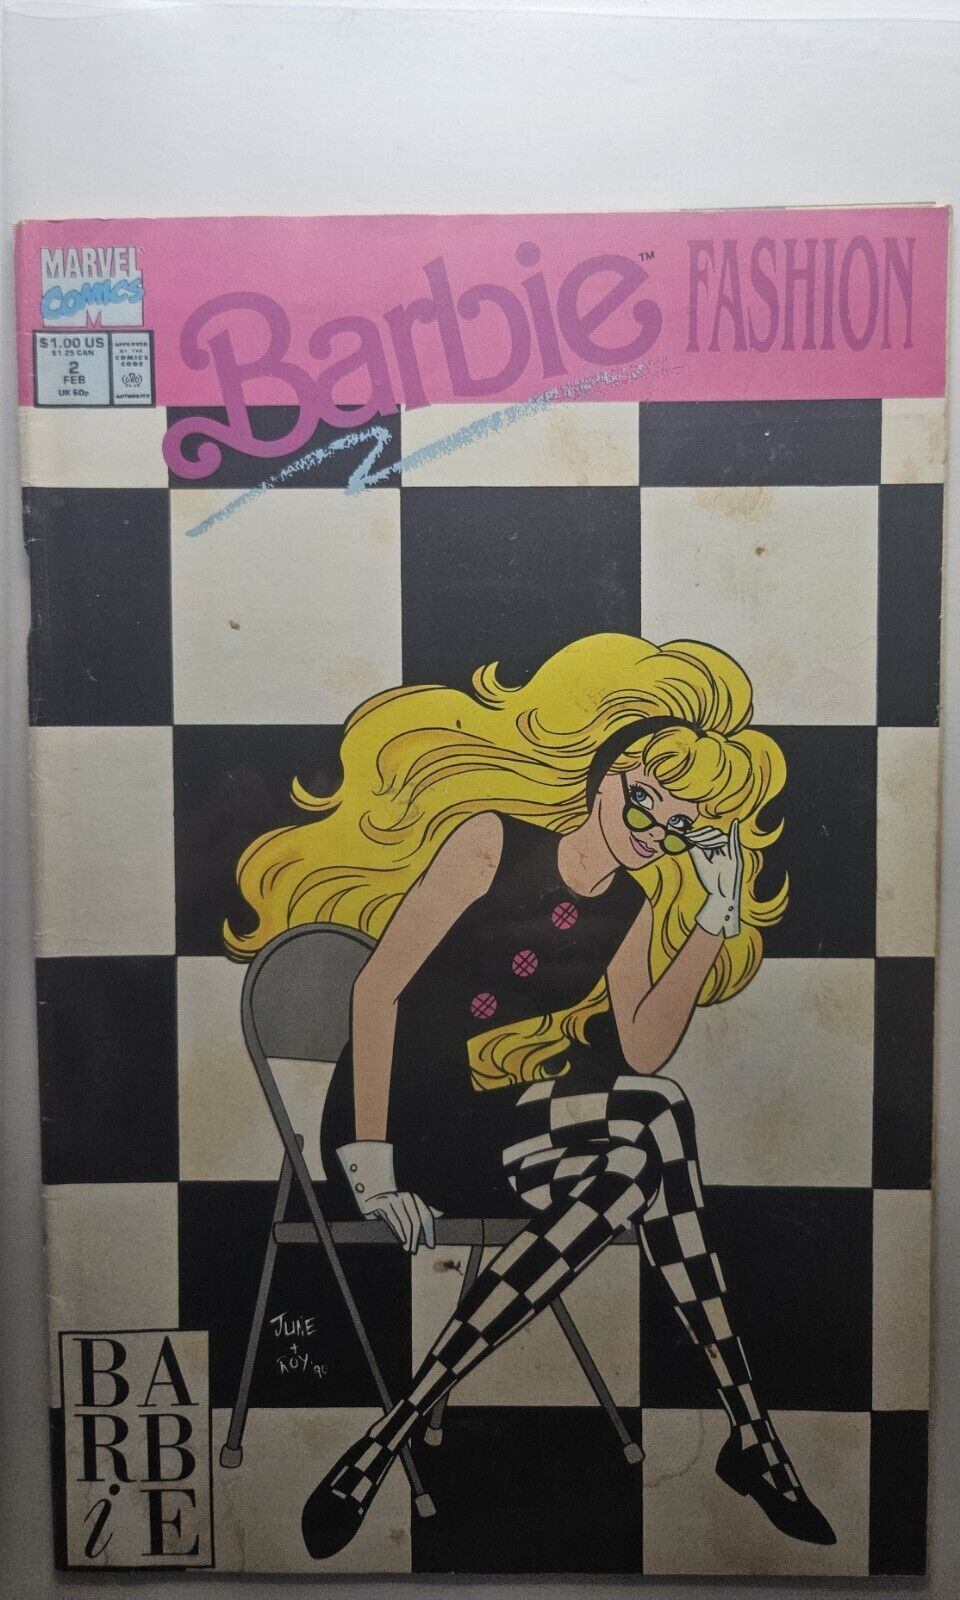 Barbie Fashion #2 (Marvel Comics February 1991)